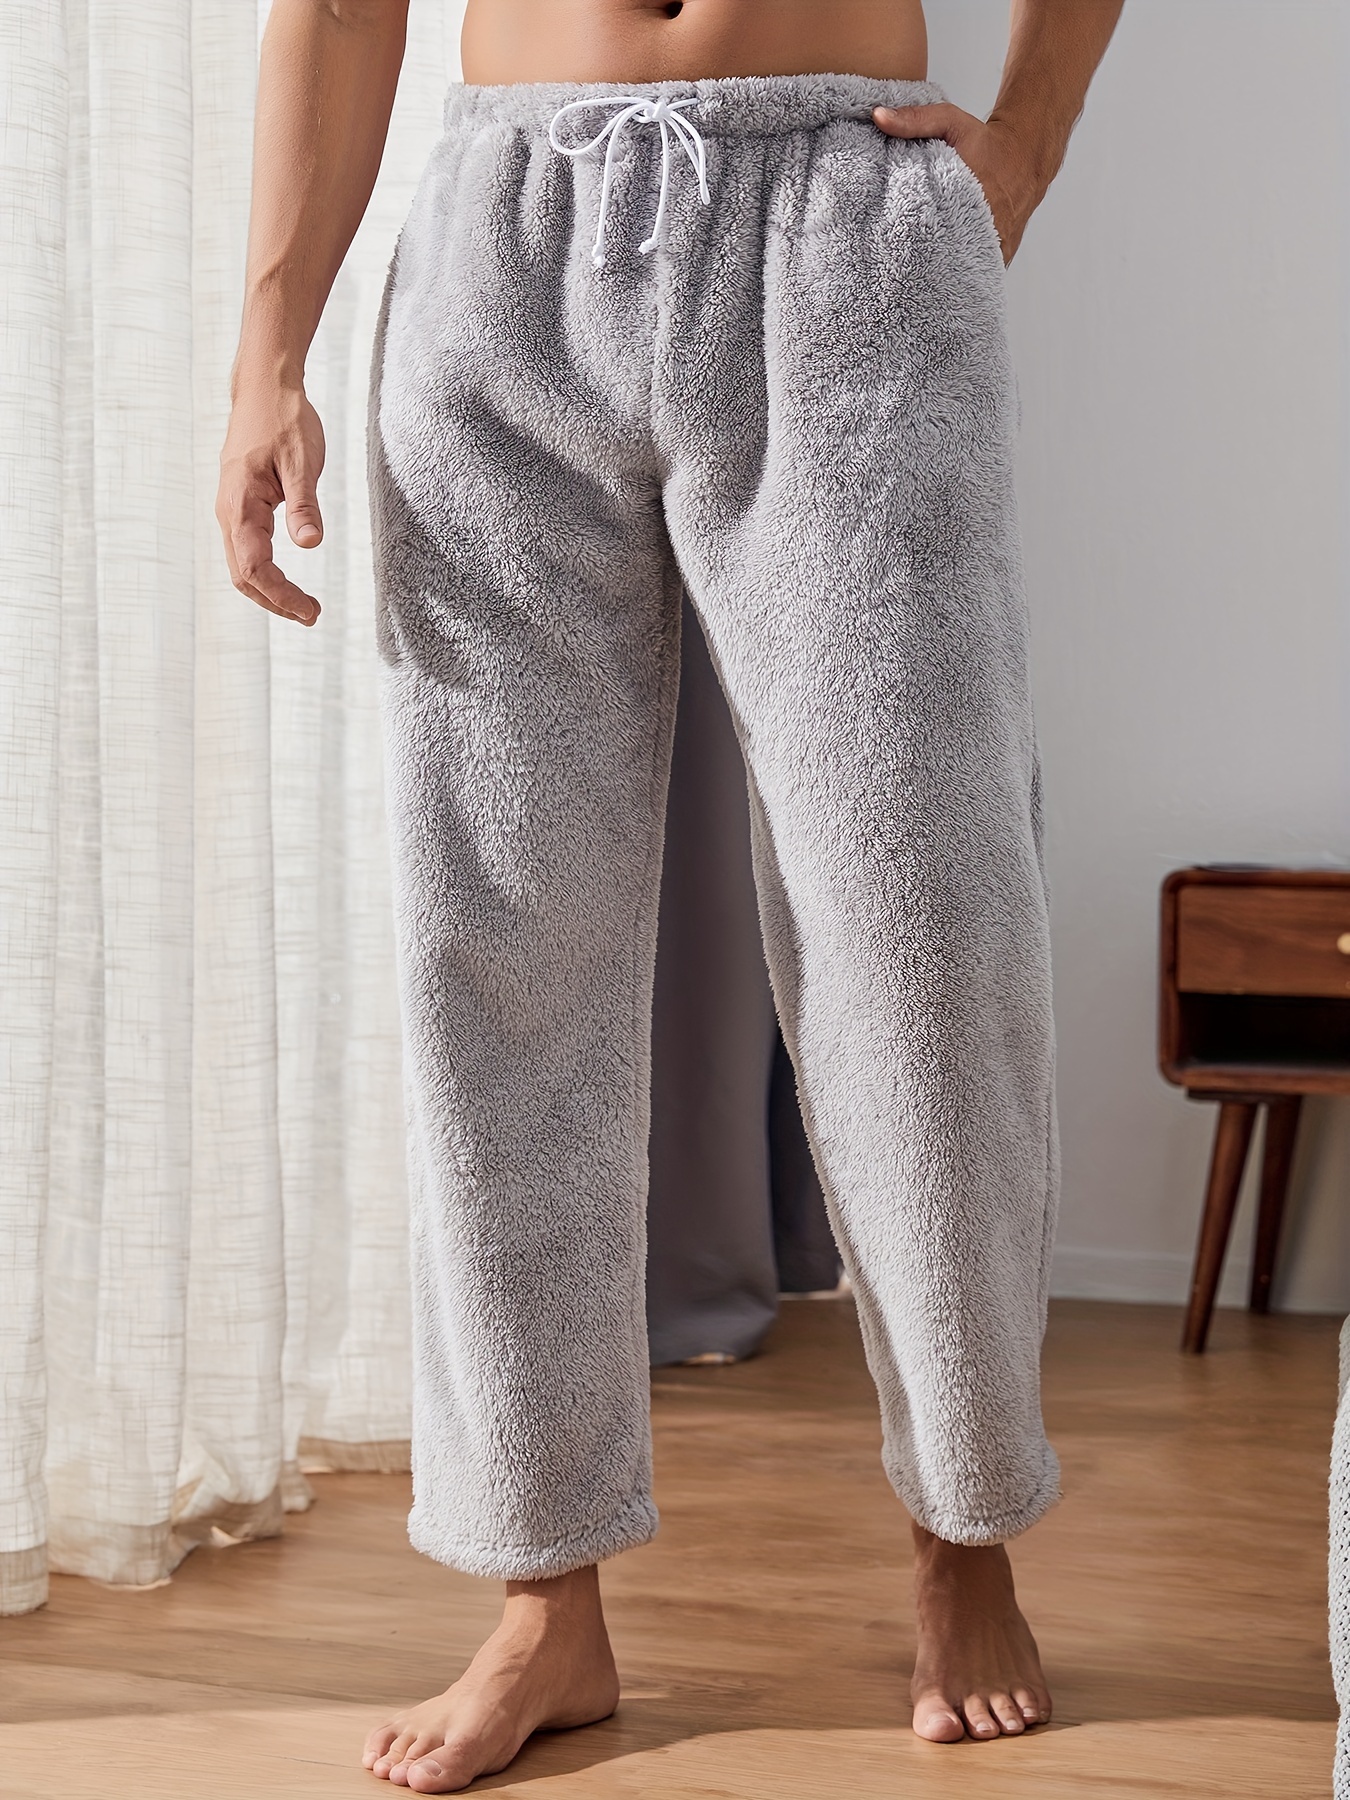 Men's Plush Warm Soft Fluffy Cozy Pajama Pants Skirt Pockets